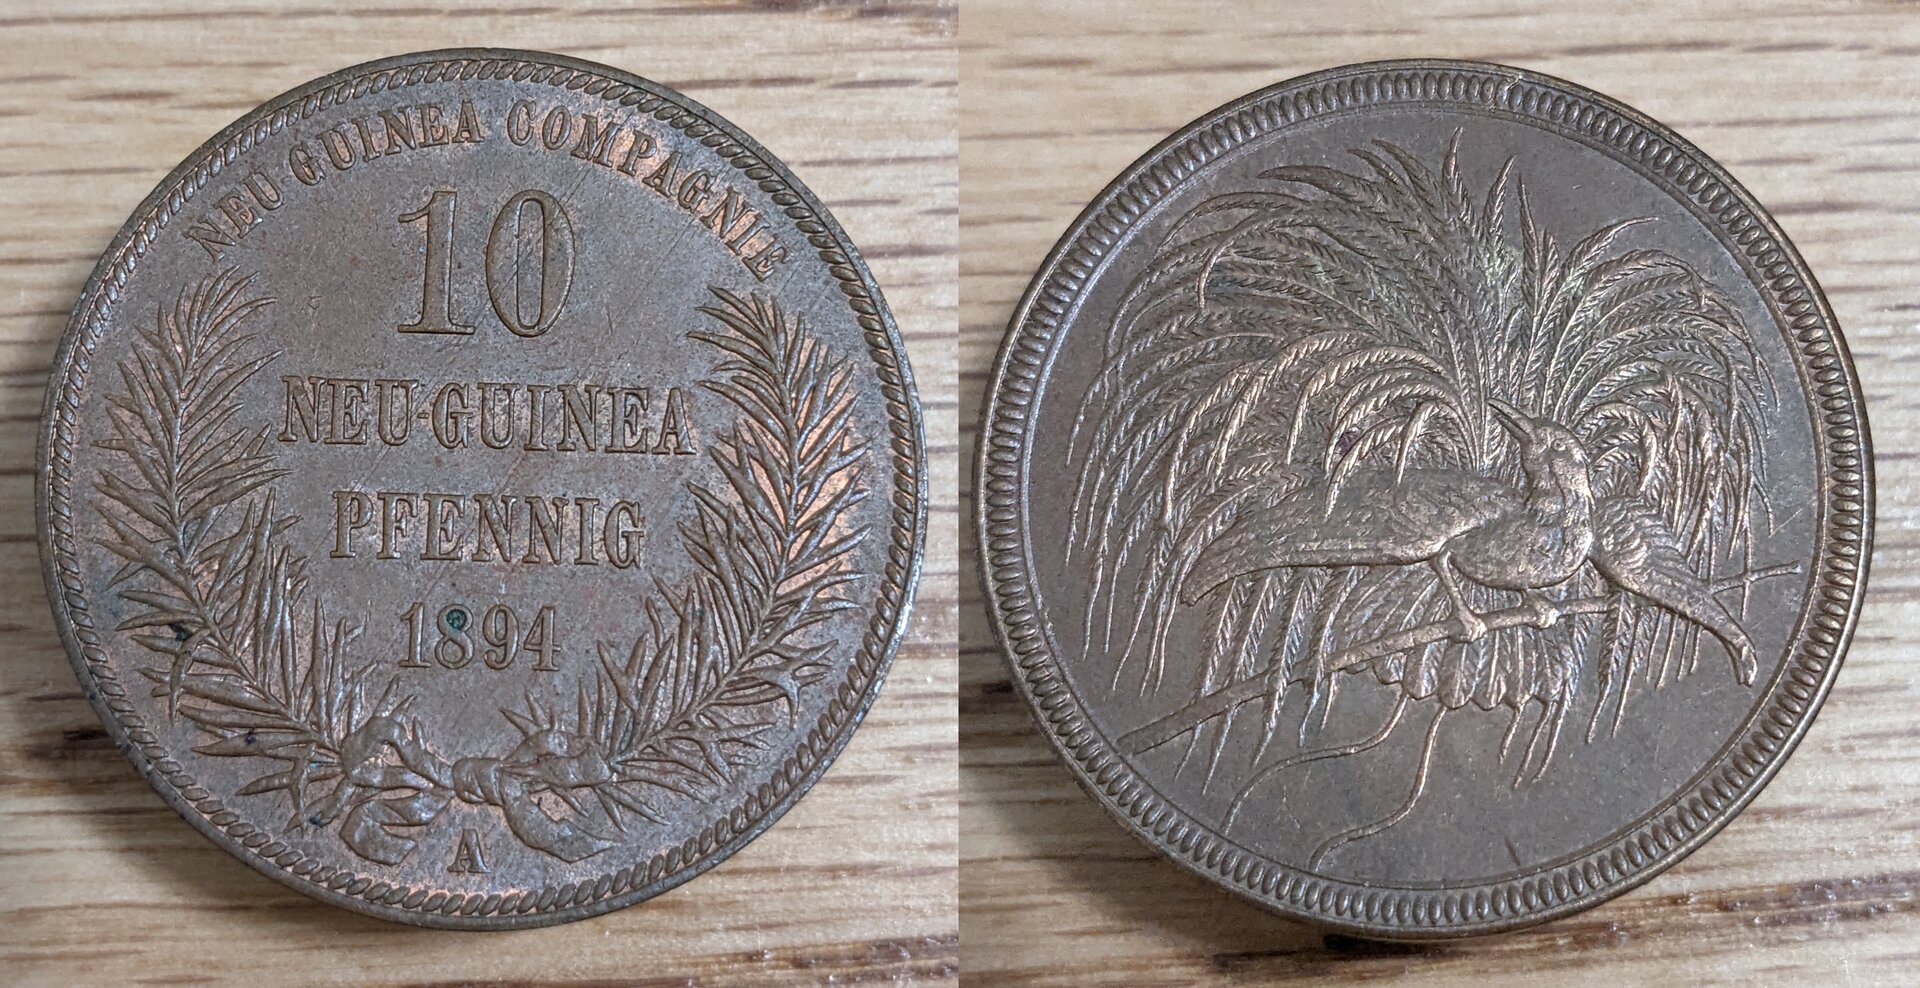 1894 new guinea 10 pfennig.jpg